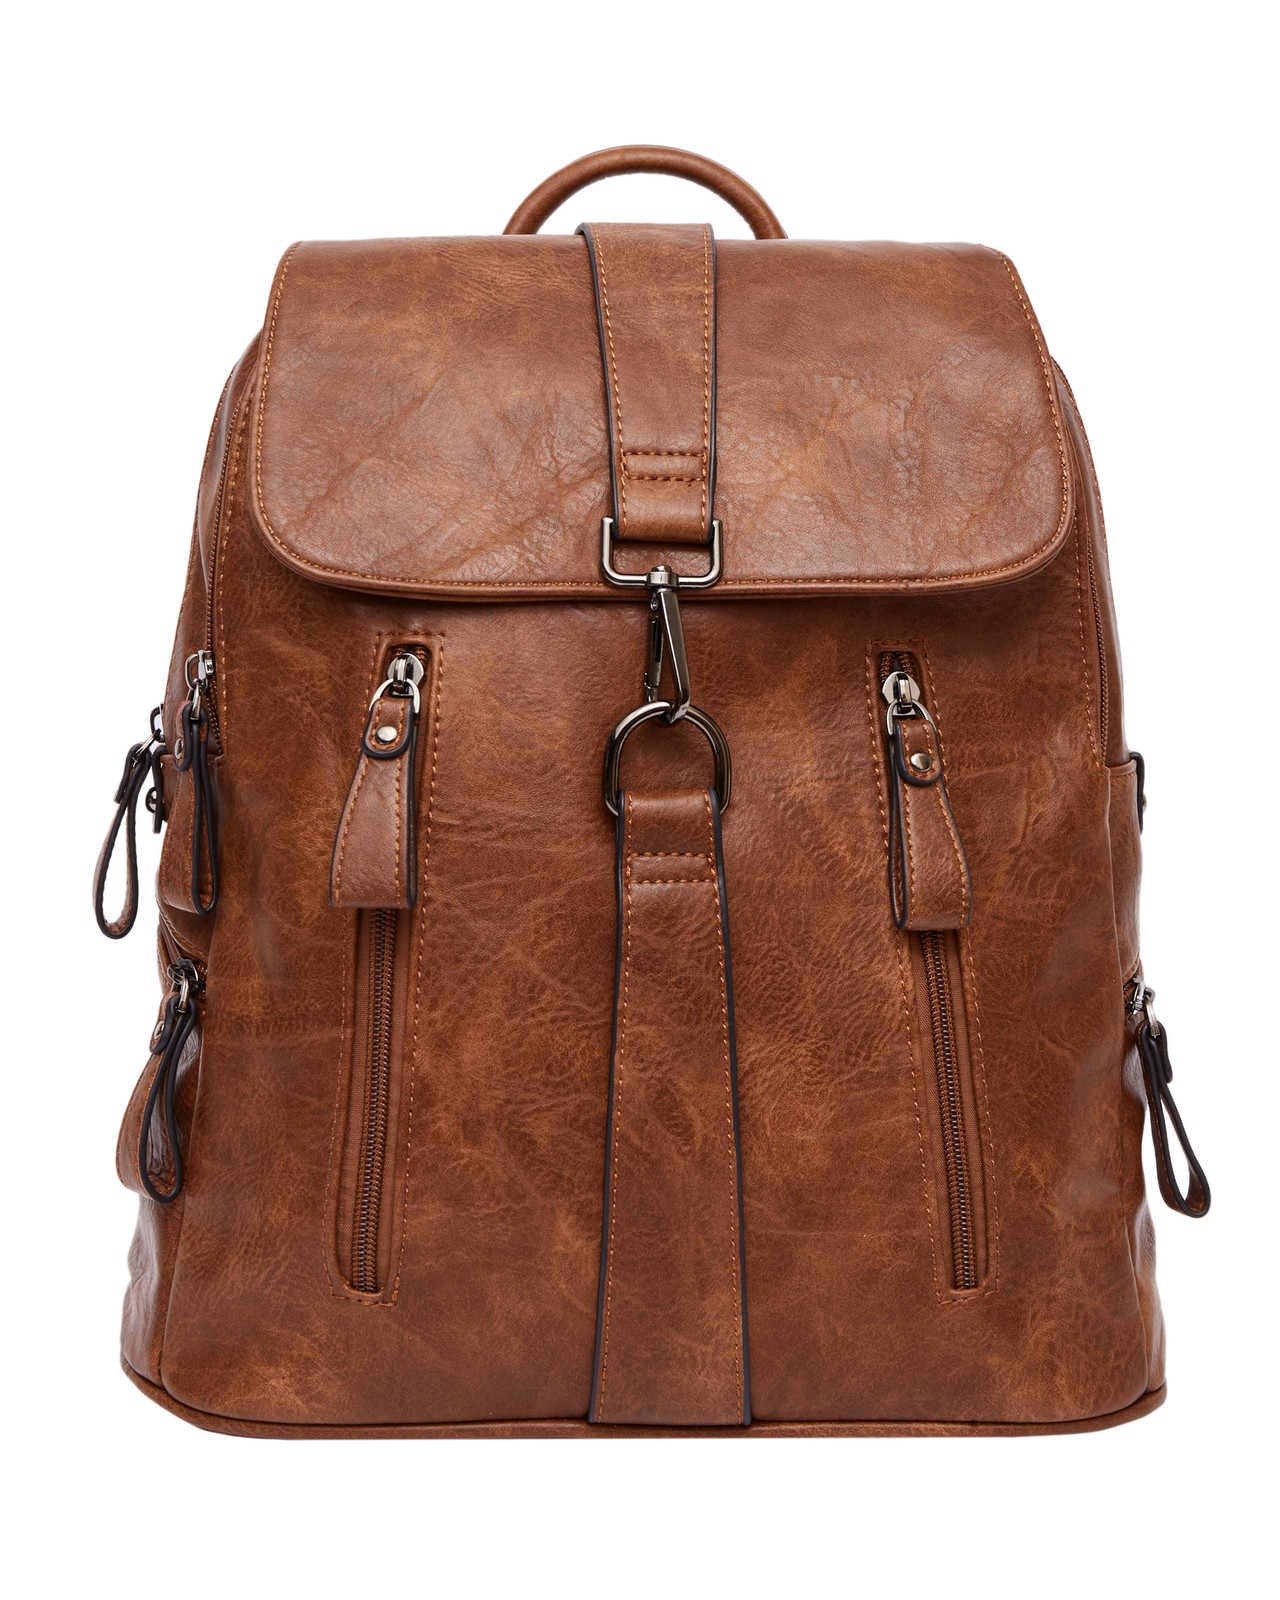 Рюкзак женский BAGS-ART PY1971 коричневый, 35х30х10 см